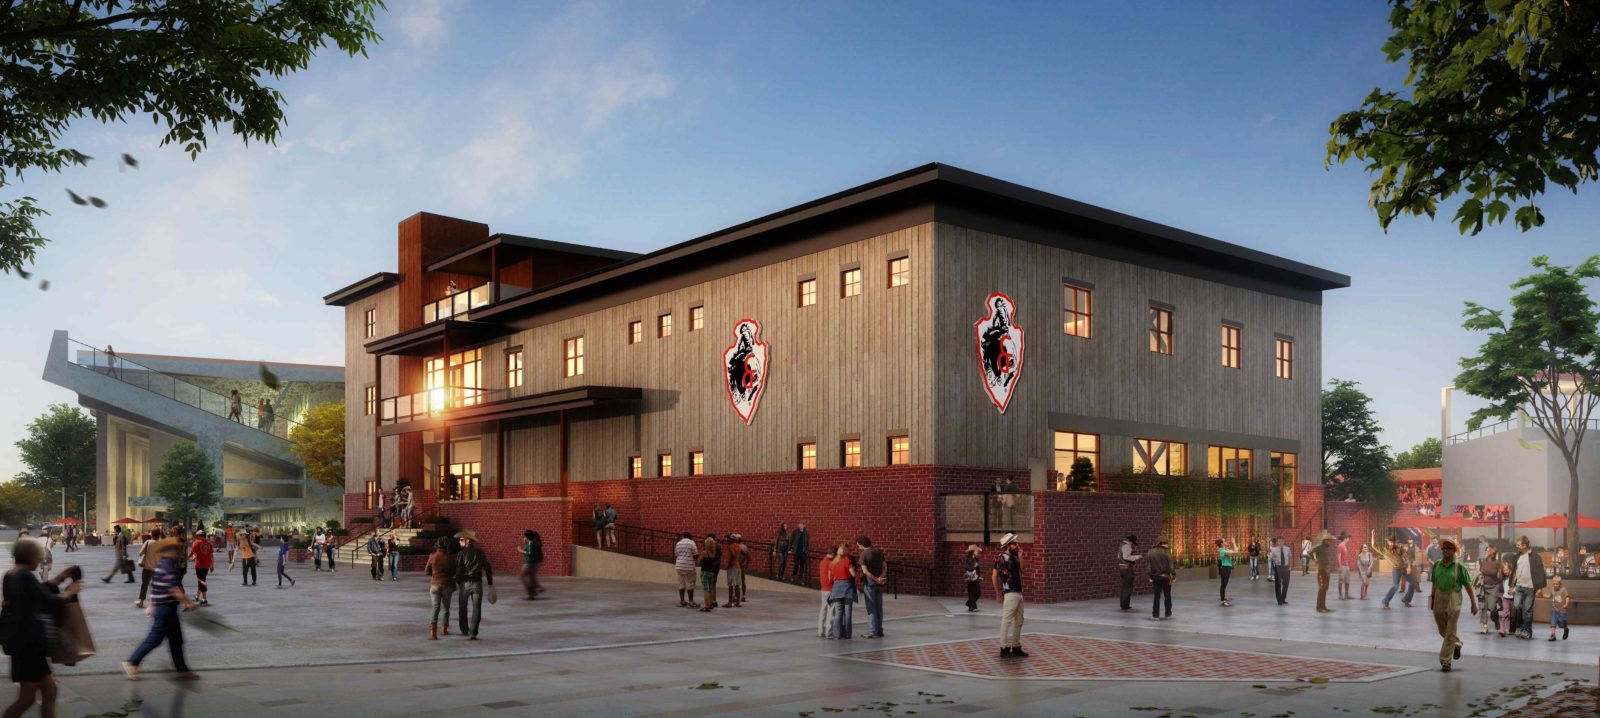 Cheyenne Frontier Days™ Announces Plans to Build Multi-Purpose Building